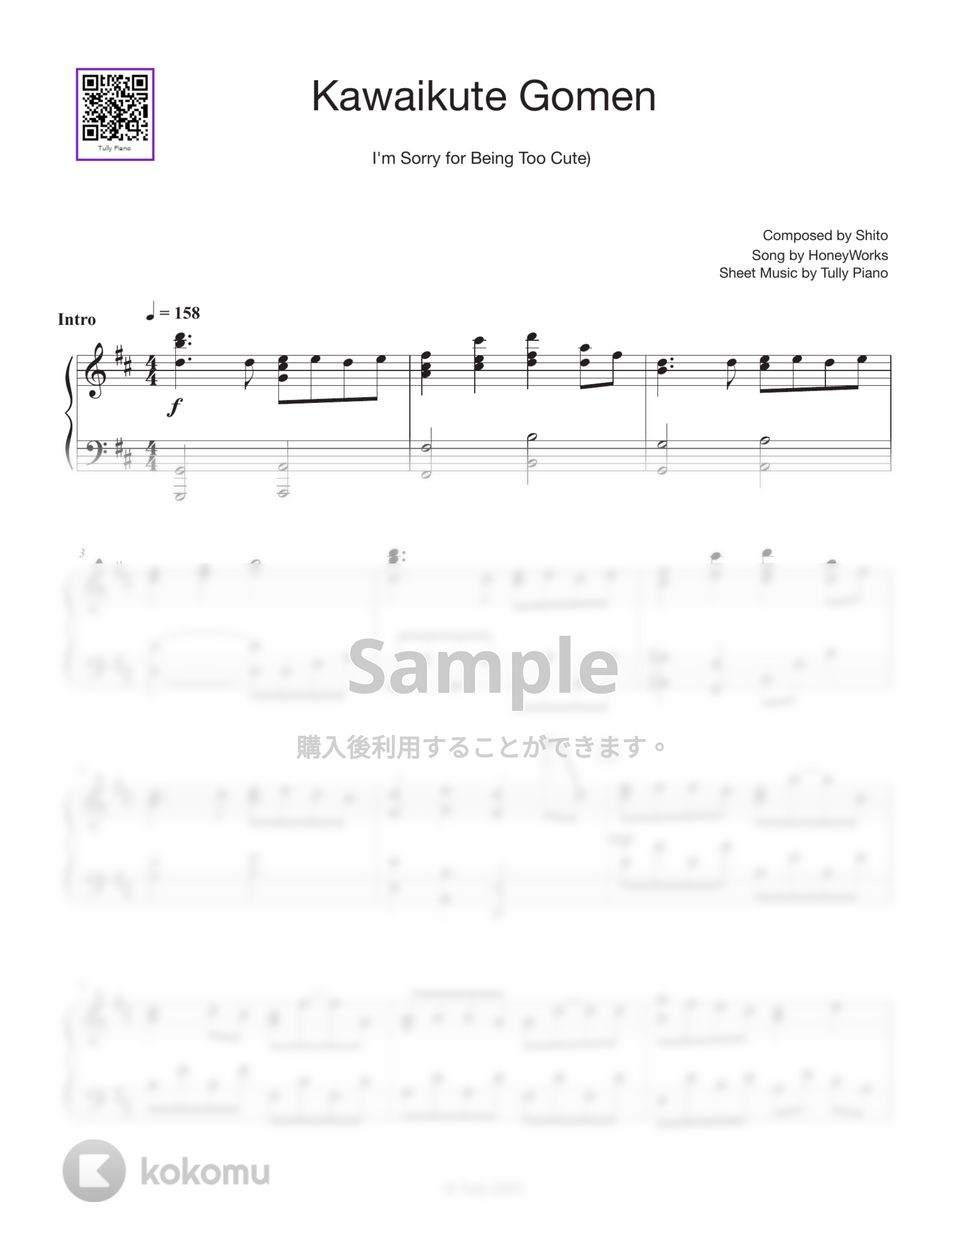 HoneyWorks - 可愛くてごめん - かぴ (Short ver.) by Tully Piano